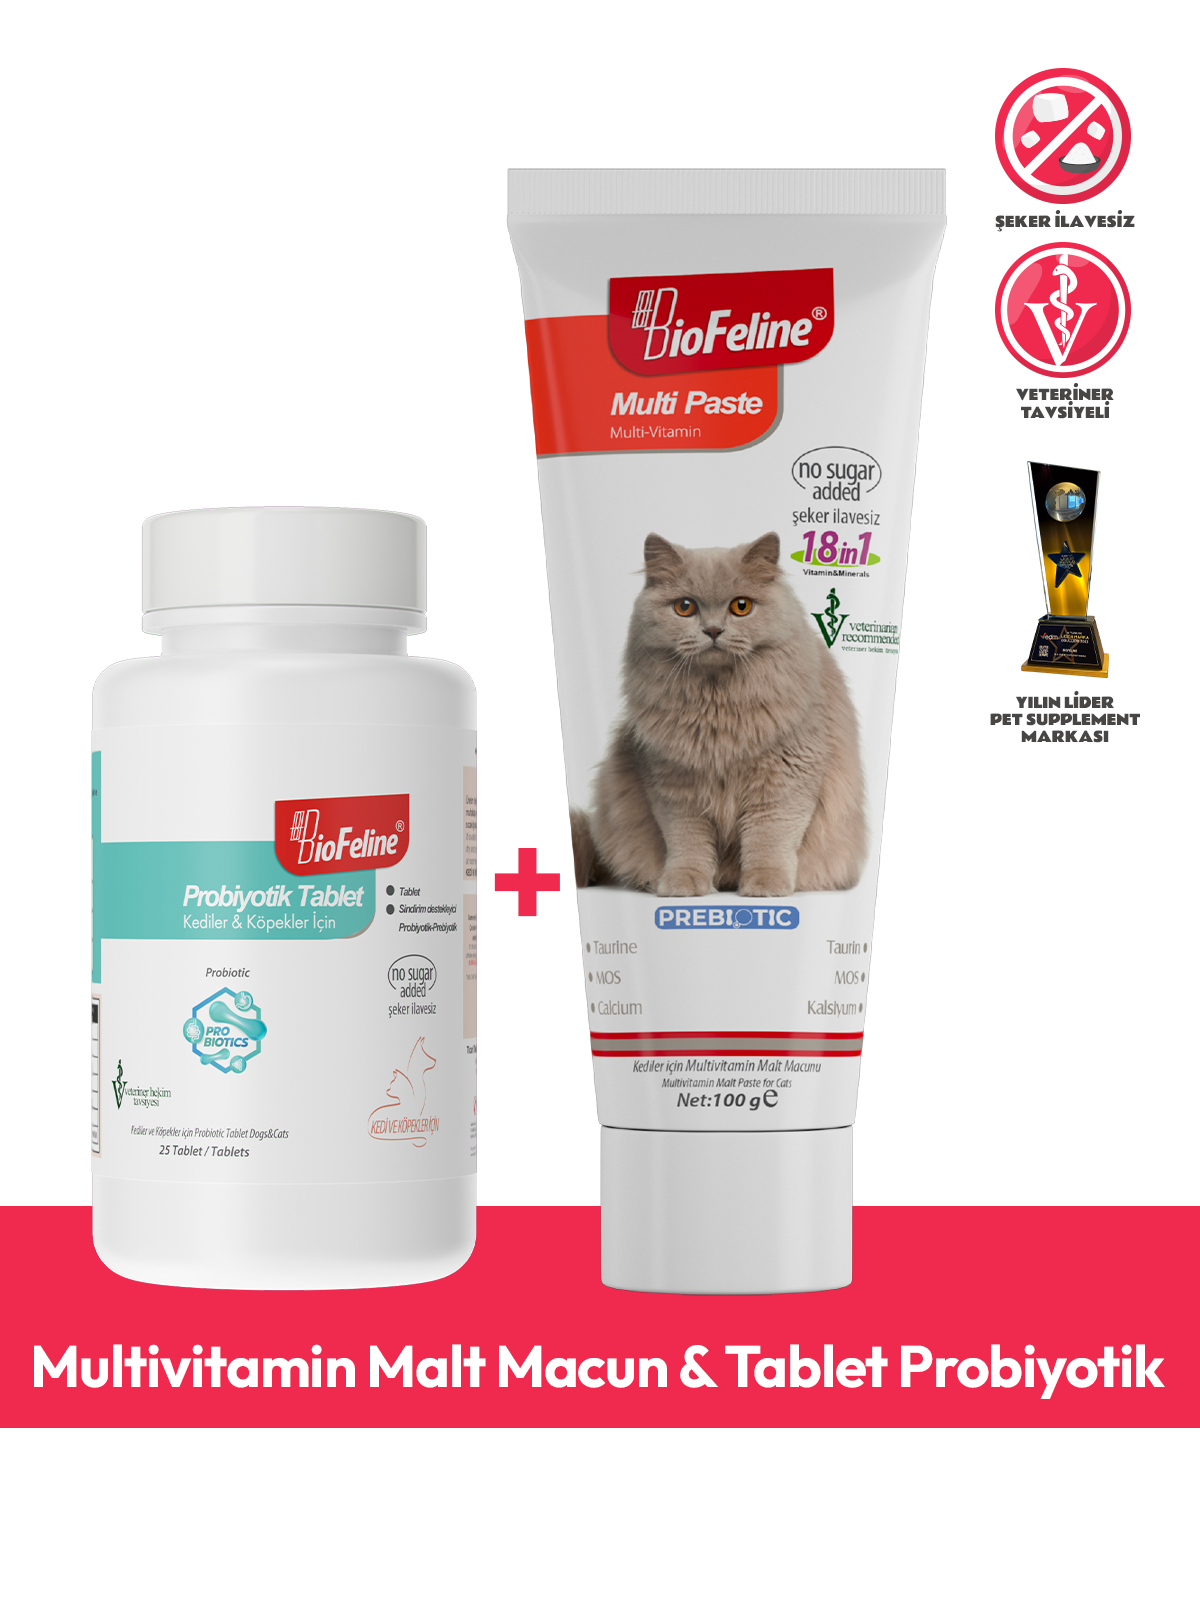 Multivitamin Malt Macun & Tablet Probiyotik